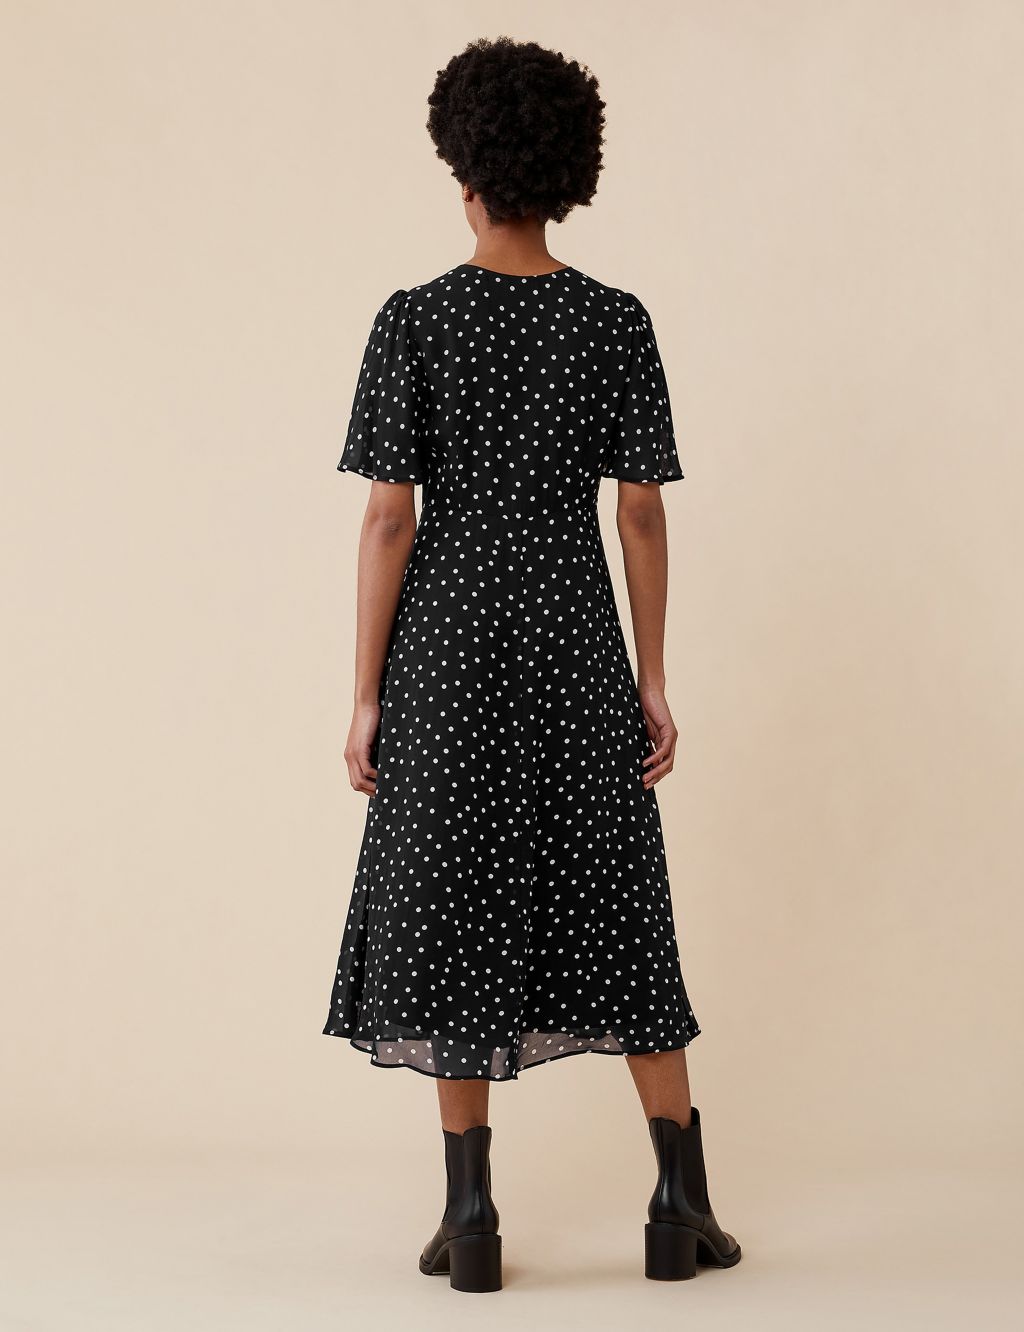 Black Polka Dot Chiffon Dress Summer Woman Wrap Dress Short 